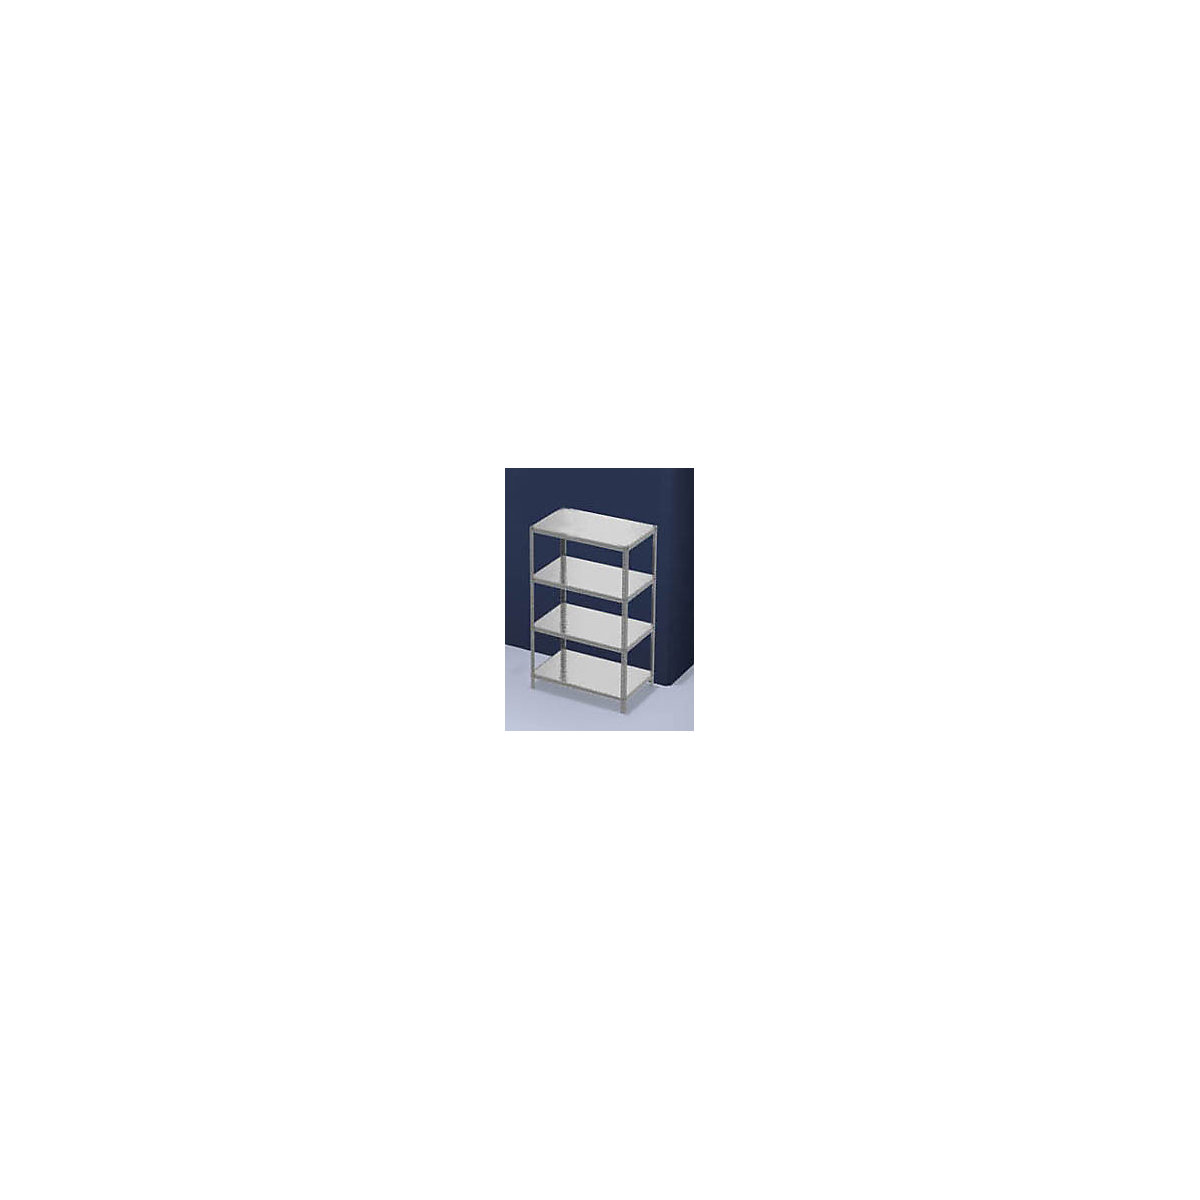 Bolt-together shelf unit, light duty, zinc plated – eurokraft pro, shelf unit height 1500 mm, shelf width 1000 mm, depth 600 mm, standard shelf unit-11